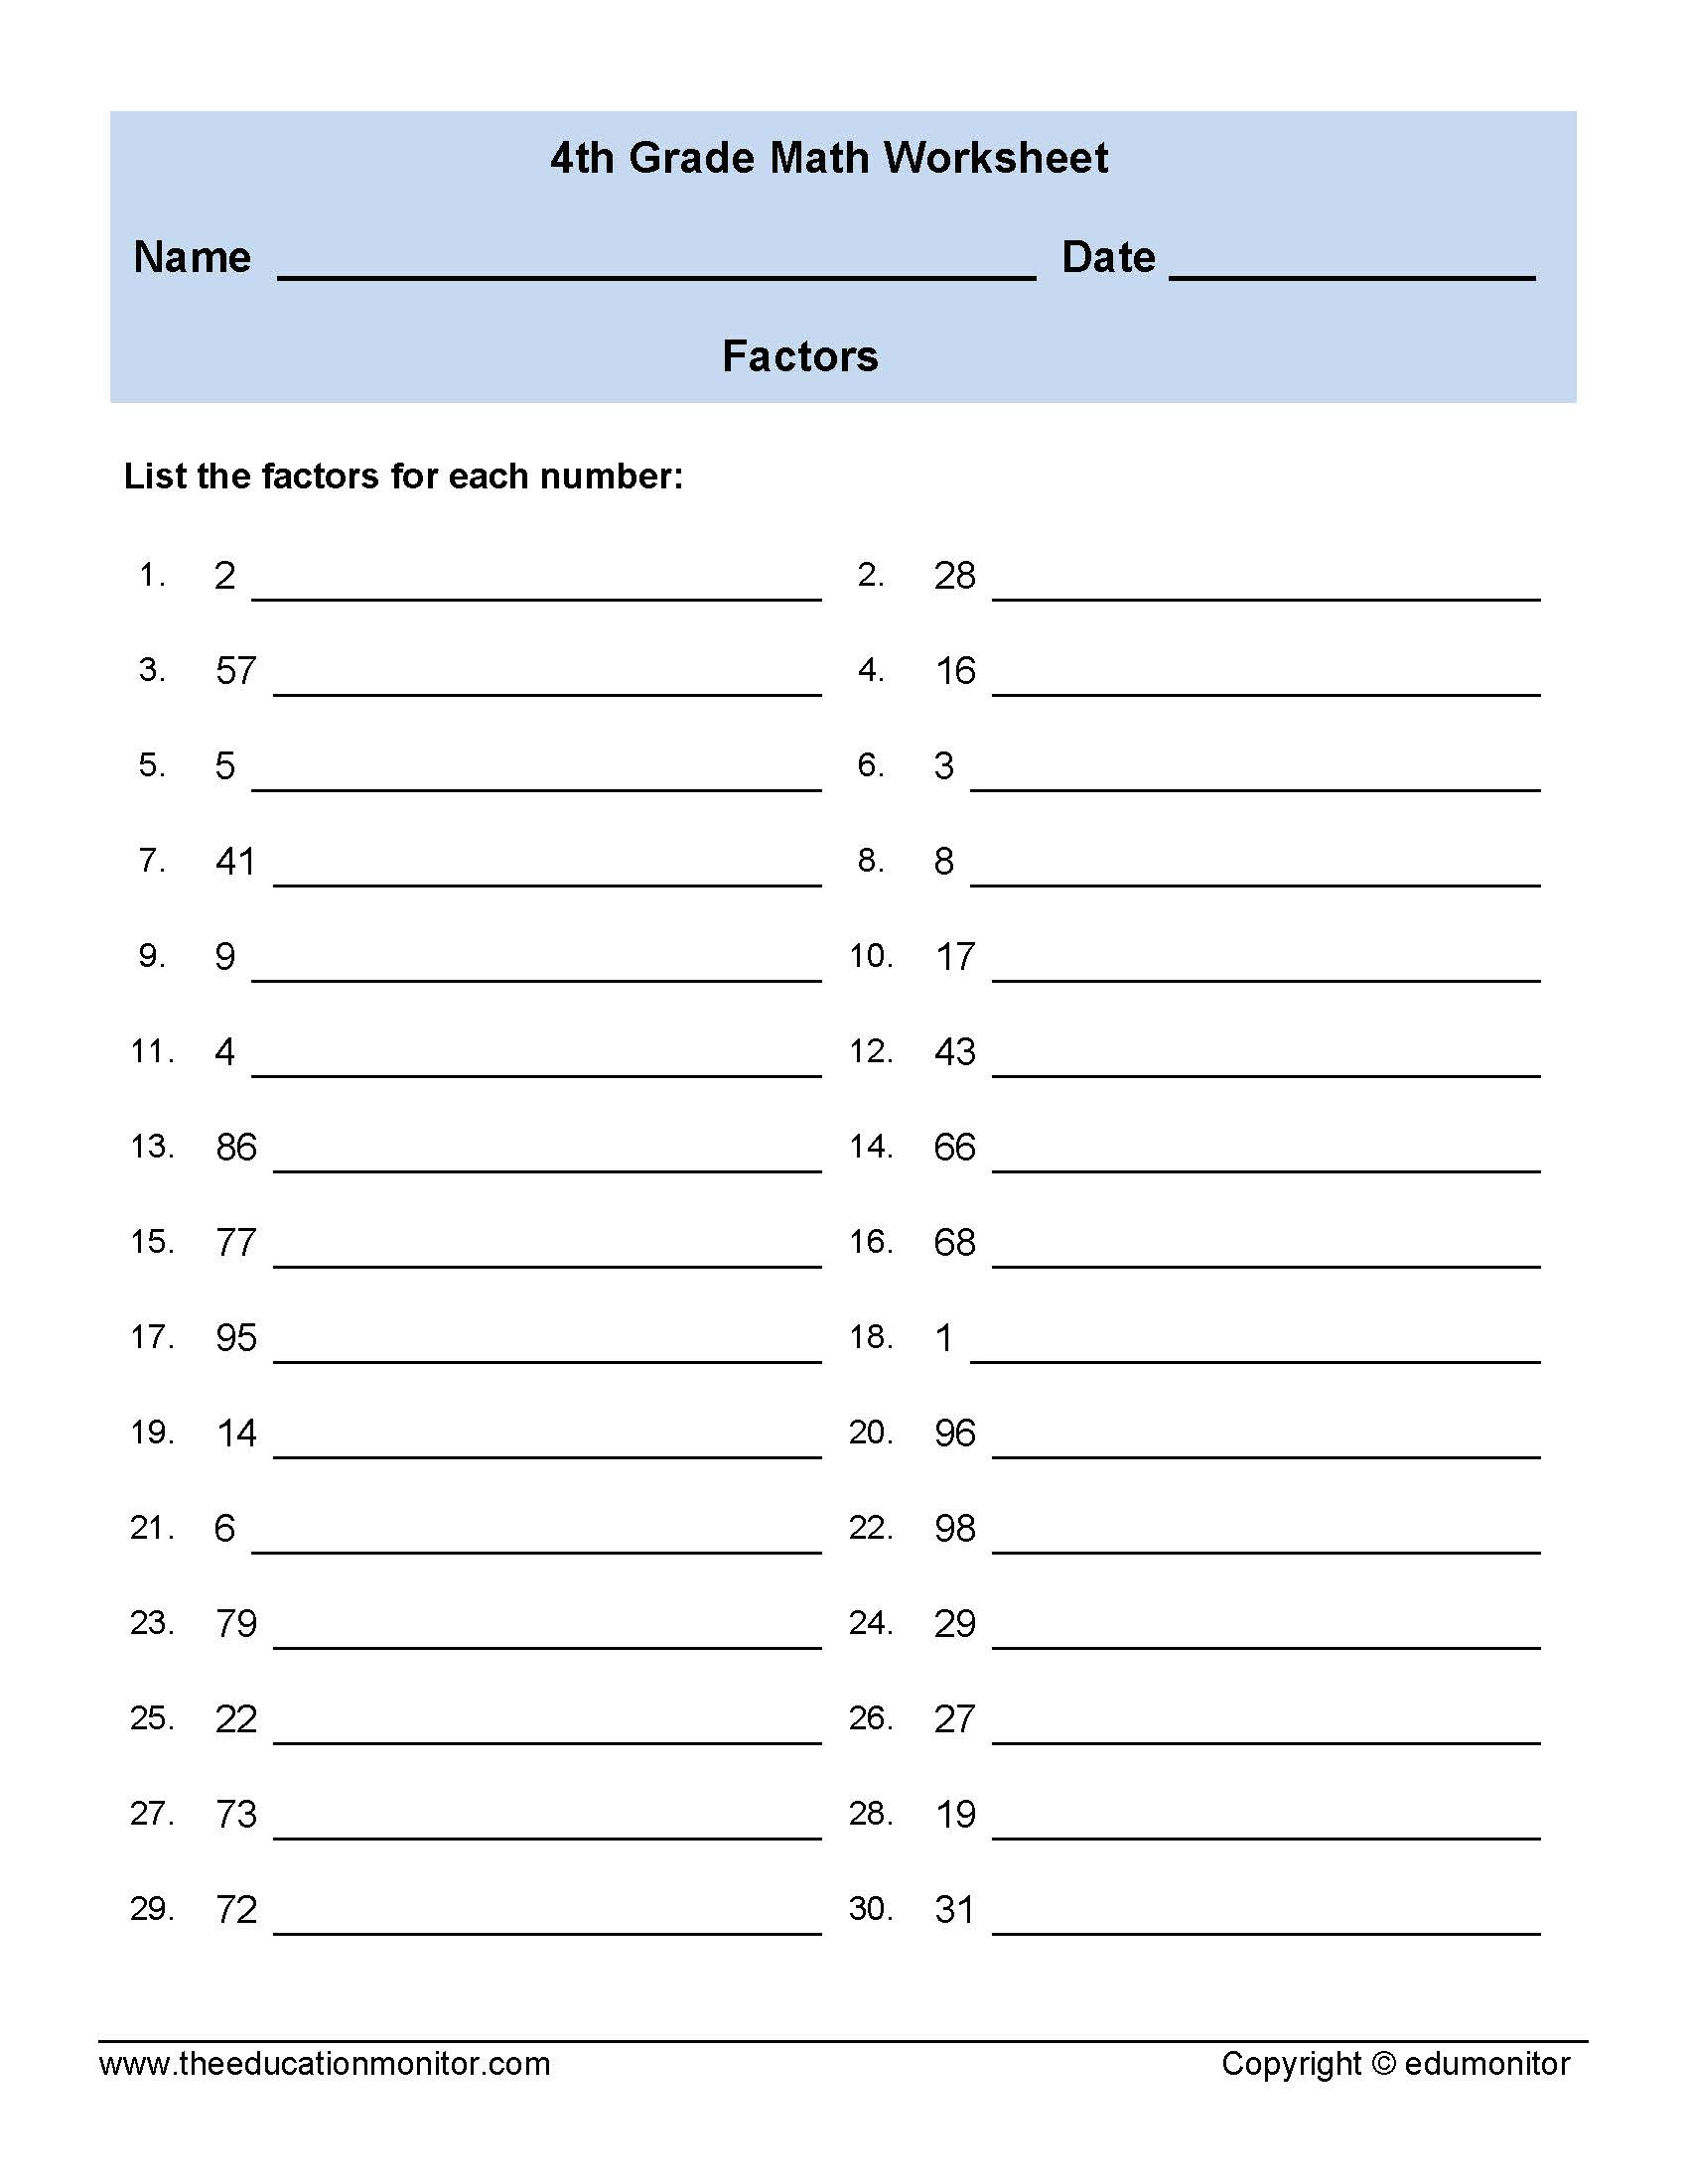 4th Grade Factors Math Worksheet free Printables